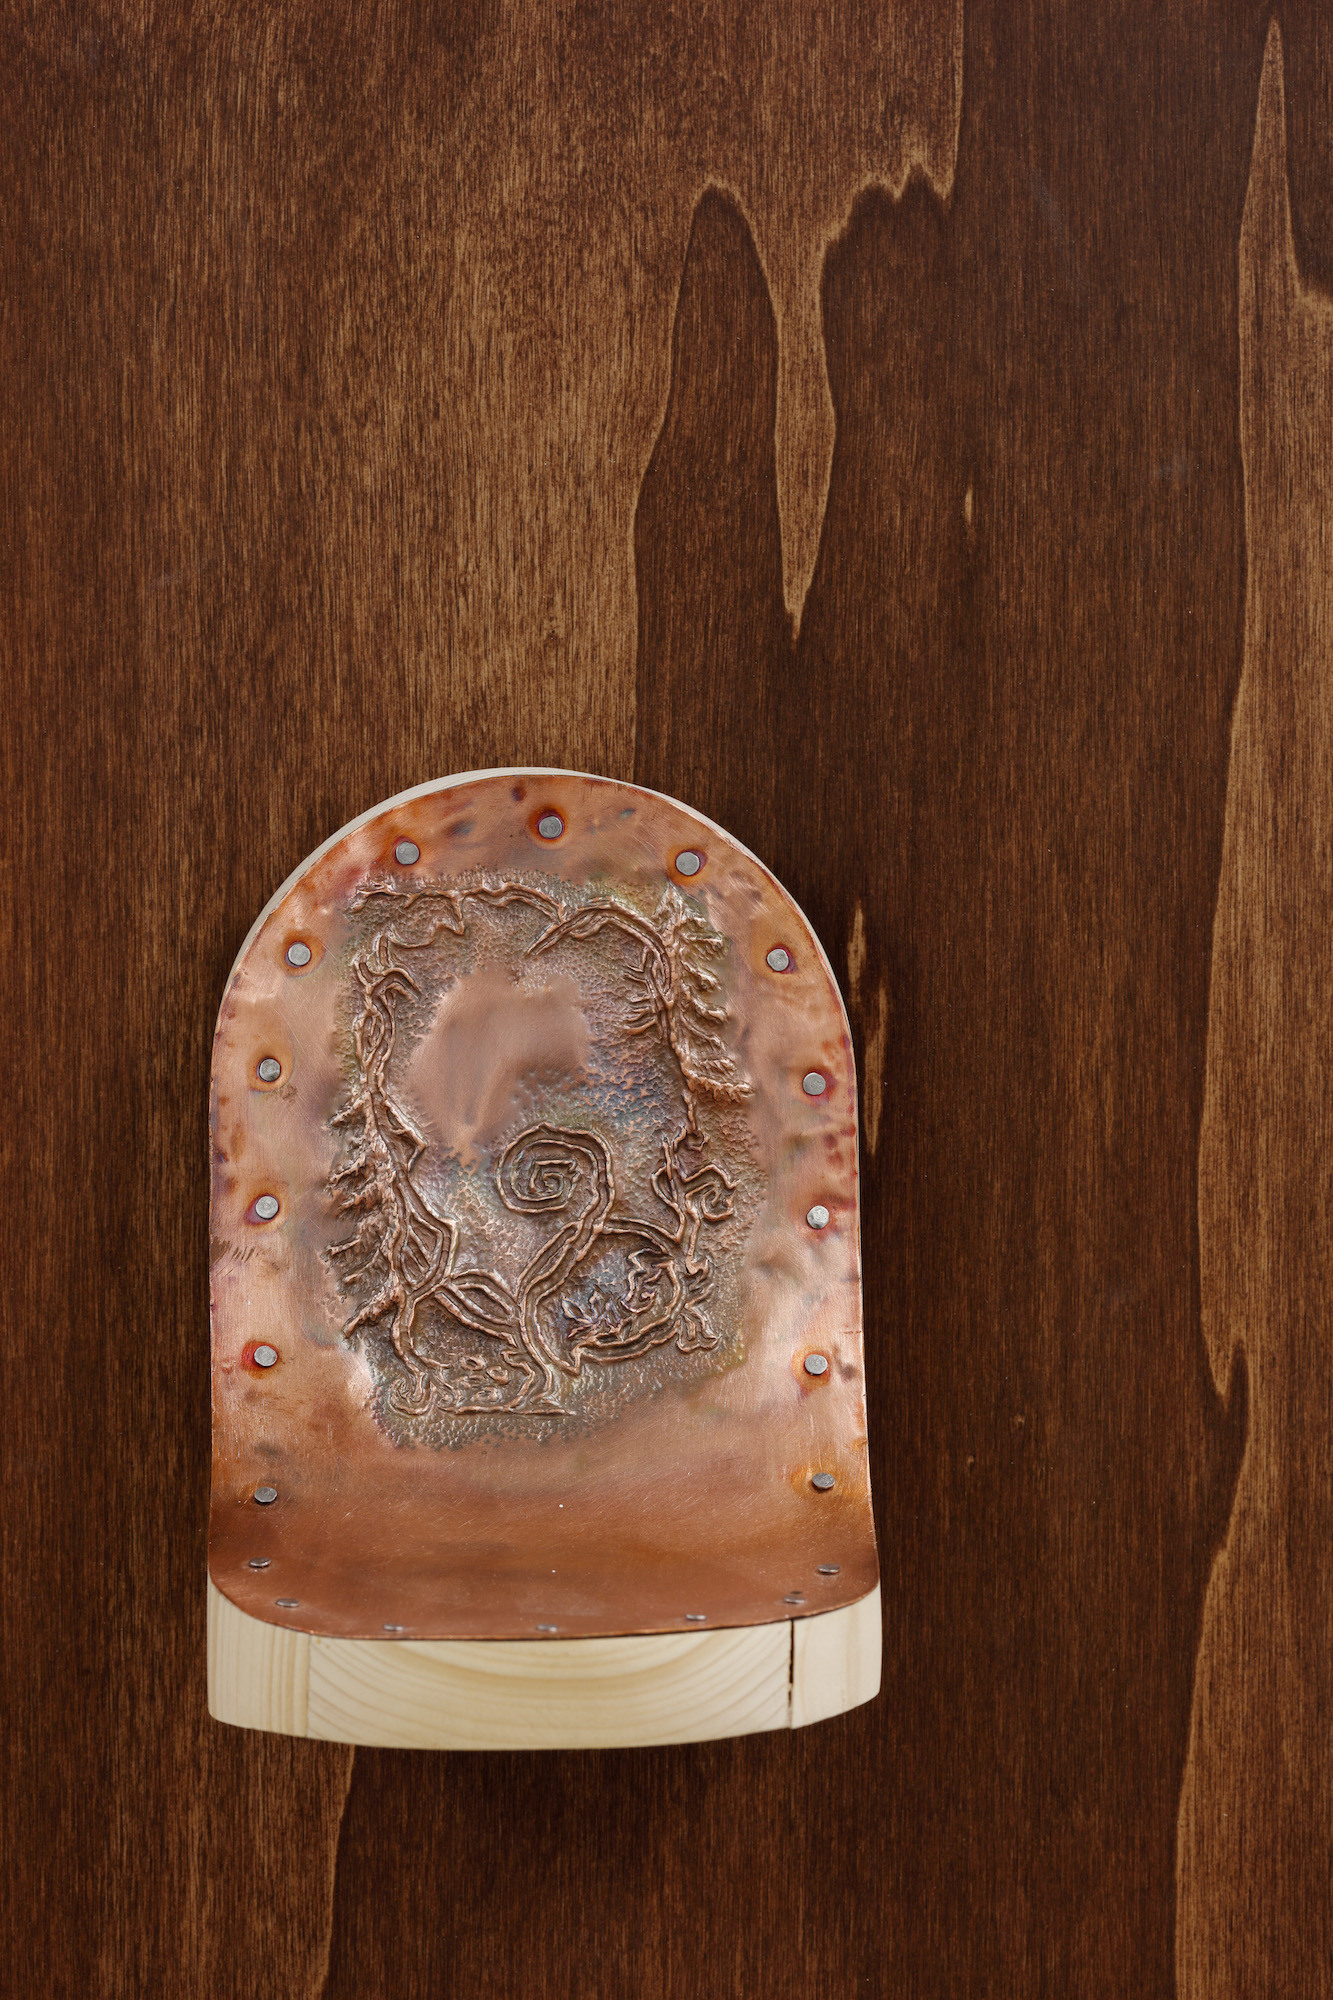 Filip Dvořák, From Headmaster‘s House (Ravine Culture series), 2021, wood, copper various dimensions (detail)